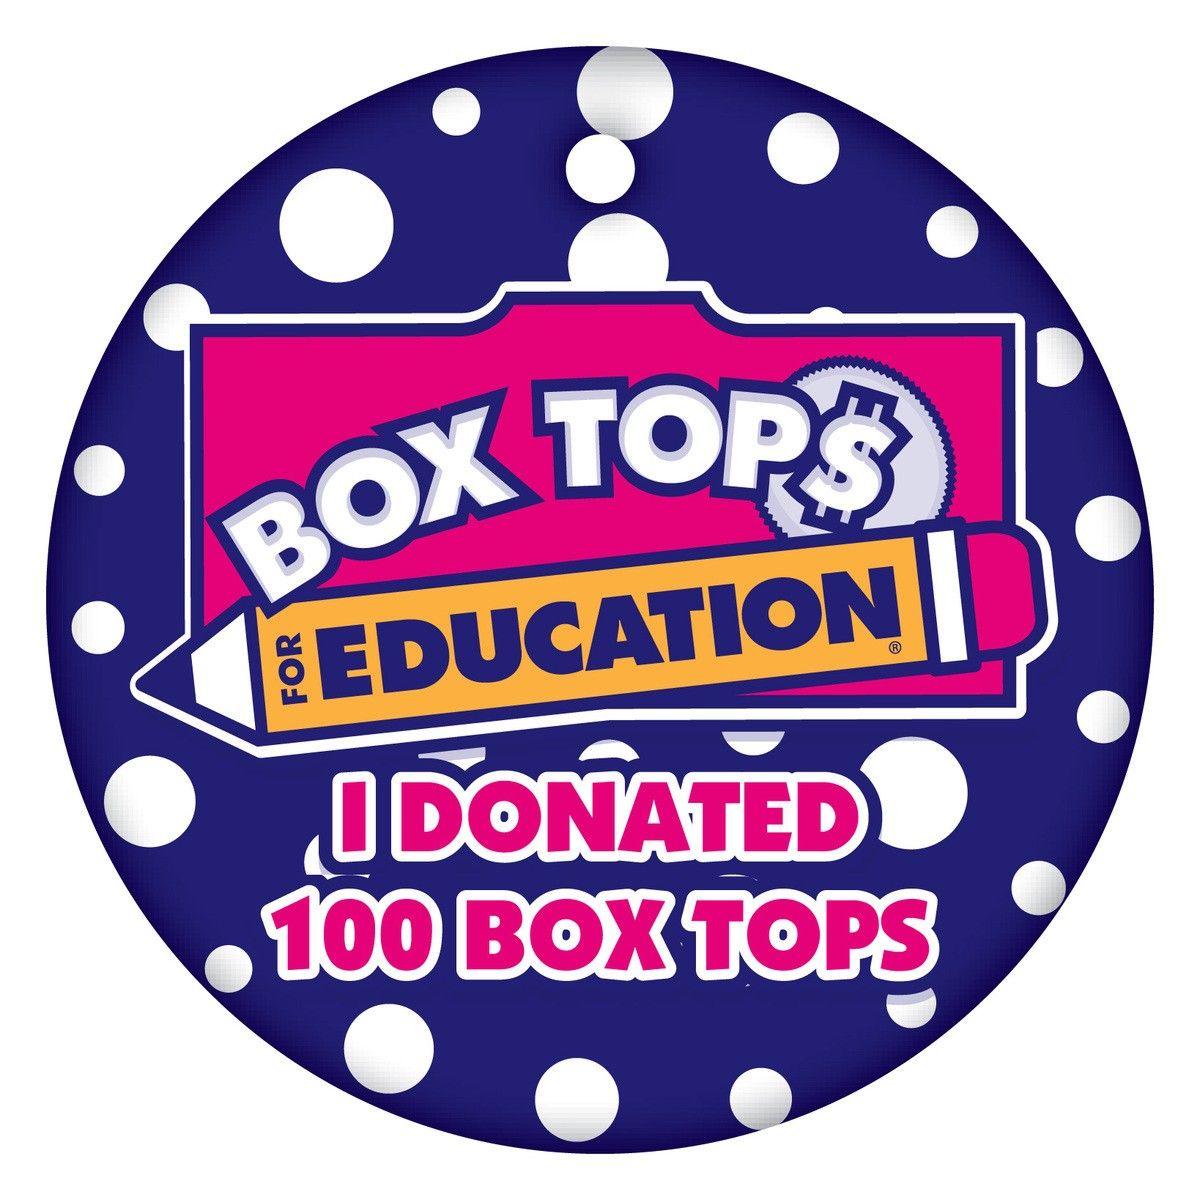 Box Tops Logo - Stock 2 Circle Tags Tops for Education (100)